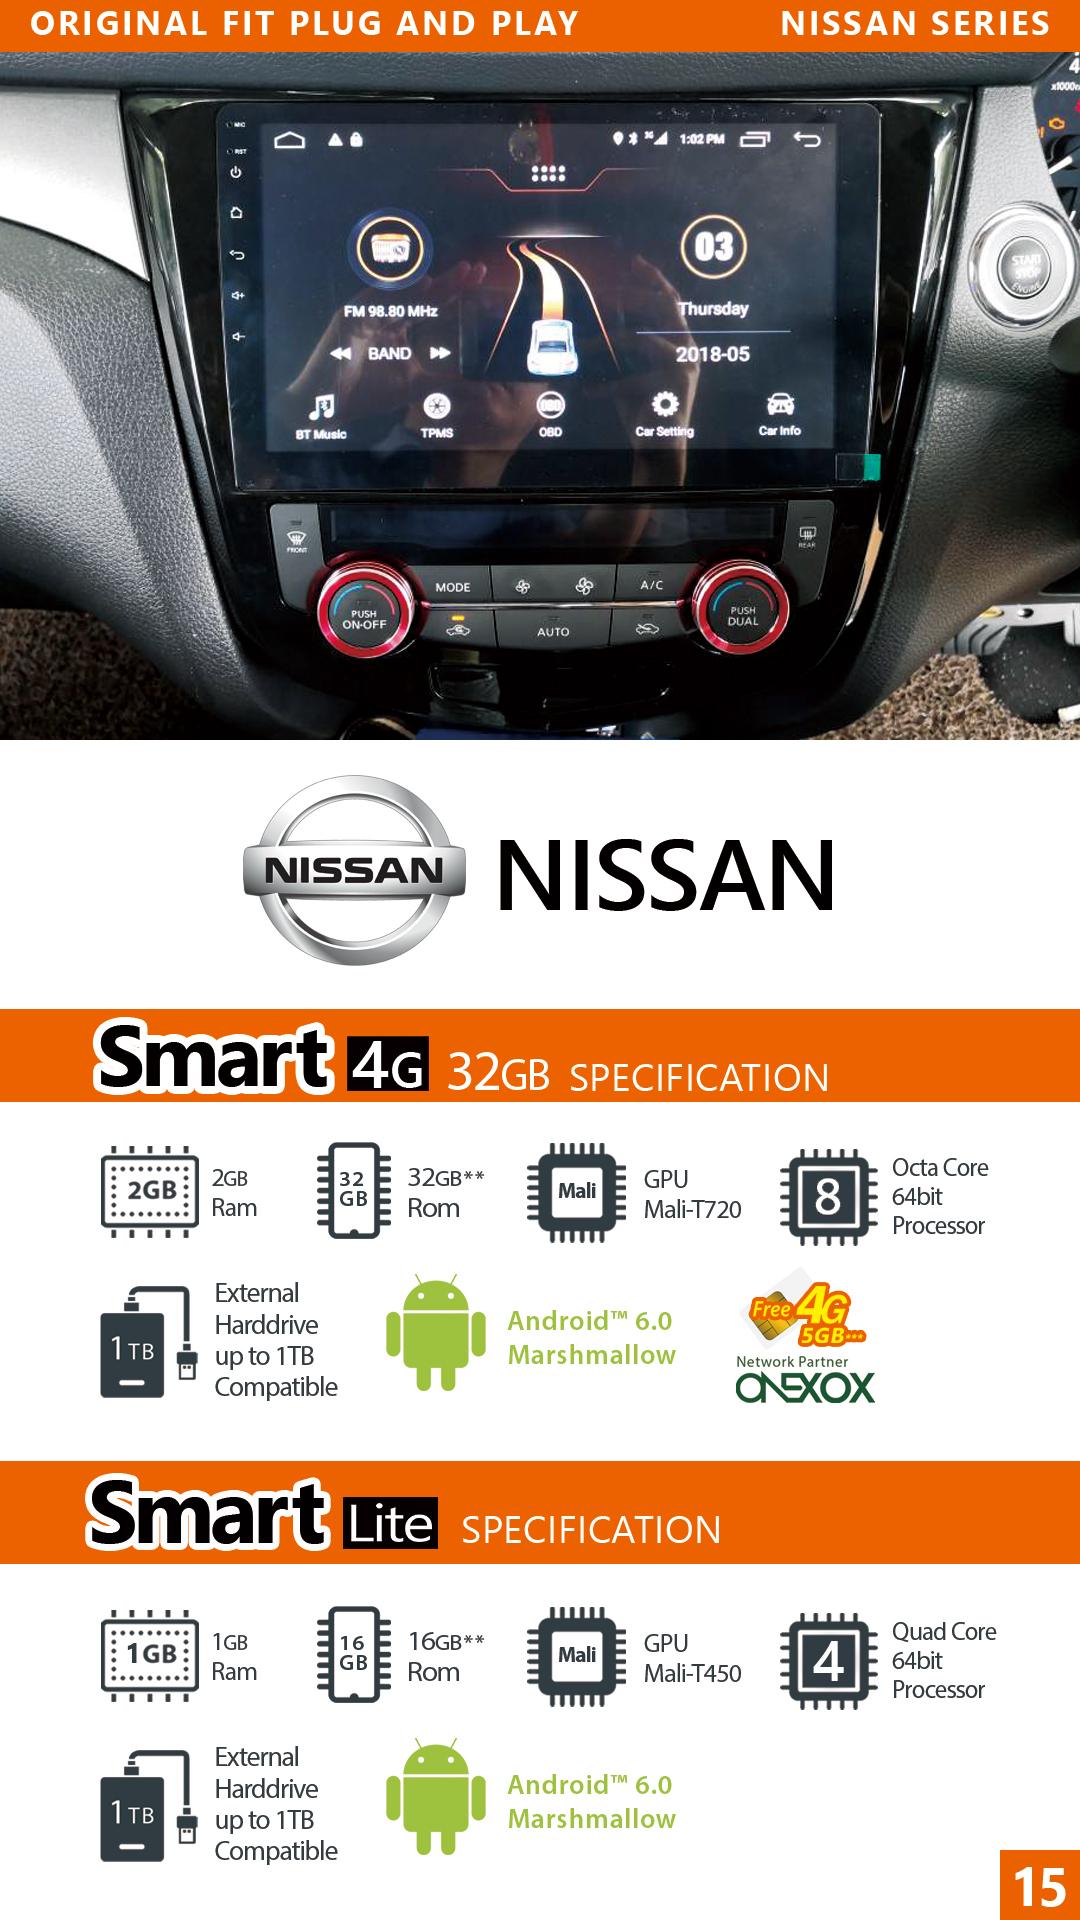 Otonavi Nissan Series Android OS Receivers